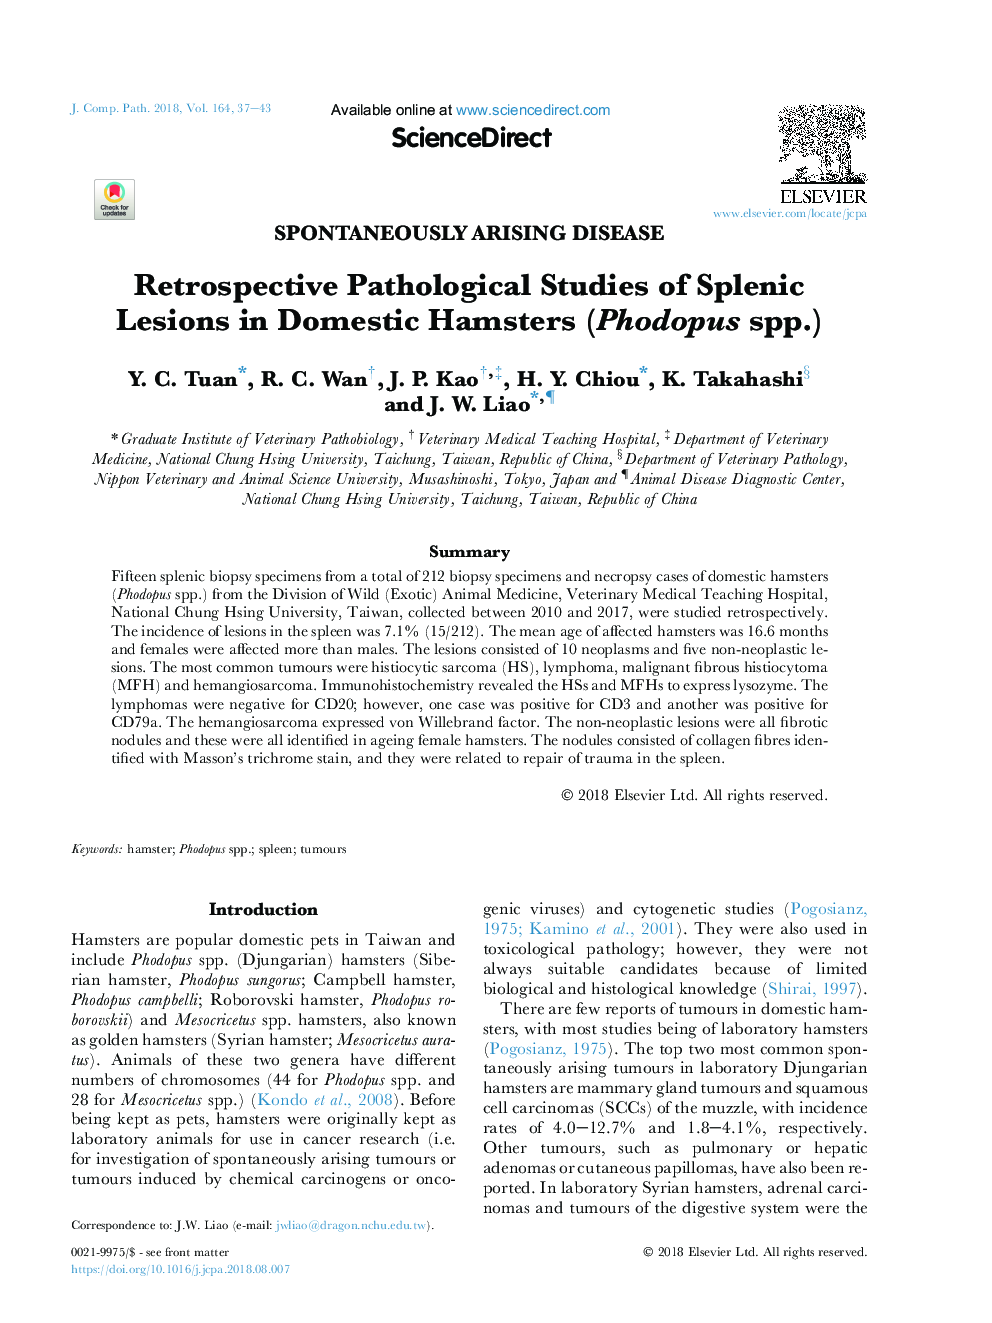 Retrospective Pathological Studies of Splenic Lesions in Domestic Hamsters (Phodopus spp.)